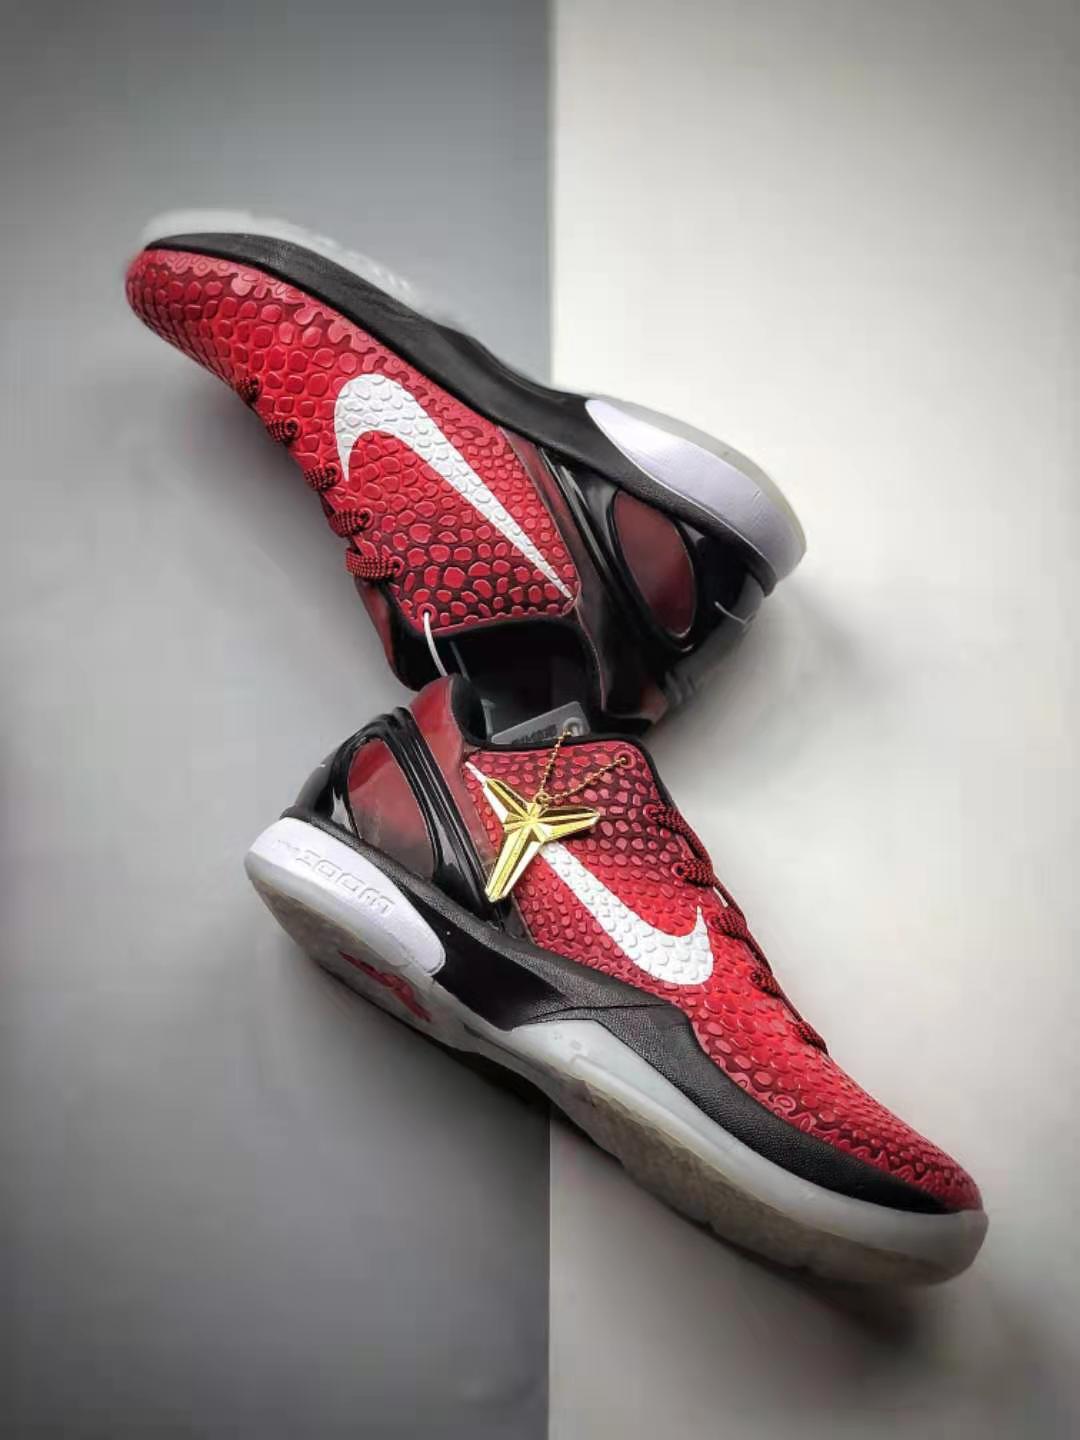 Nike Zoom Kobe 6 Protro Challenge Red Black White DH9888-600 - Iconic Kobe Signature Sneakers